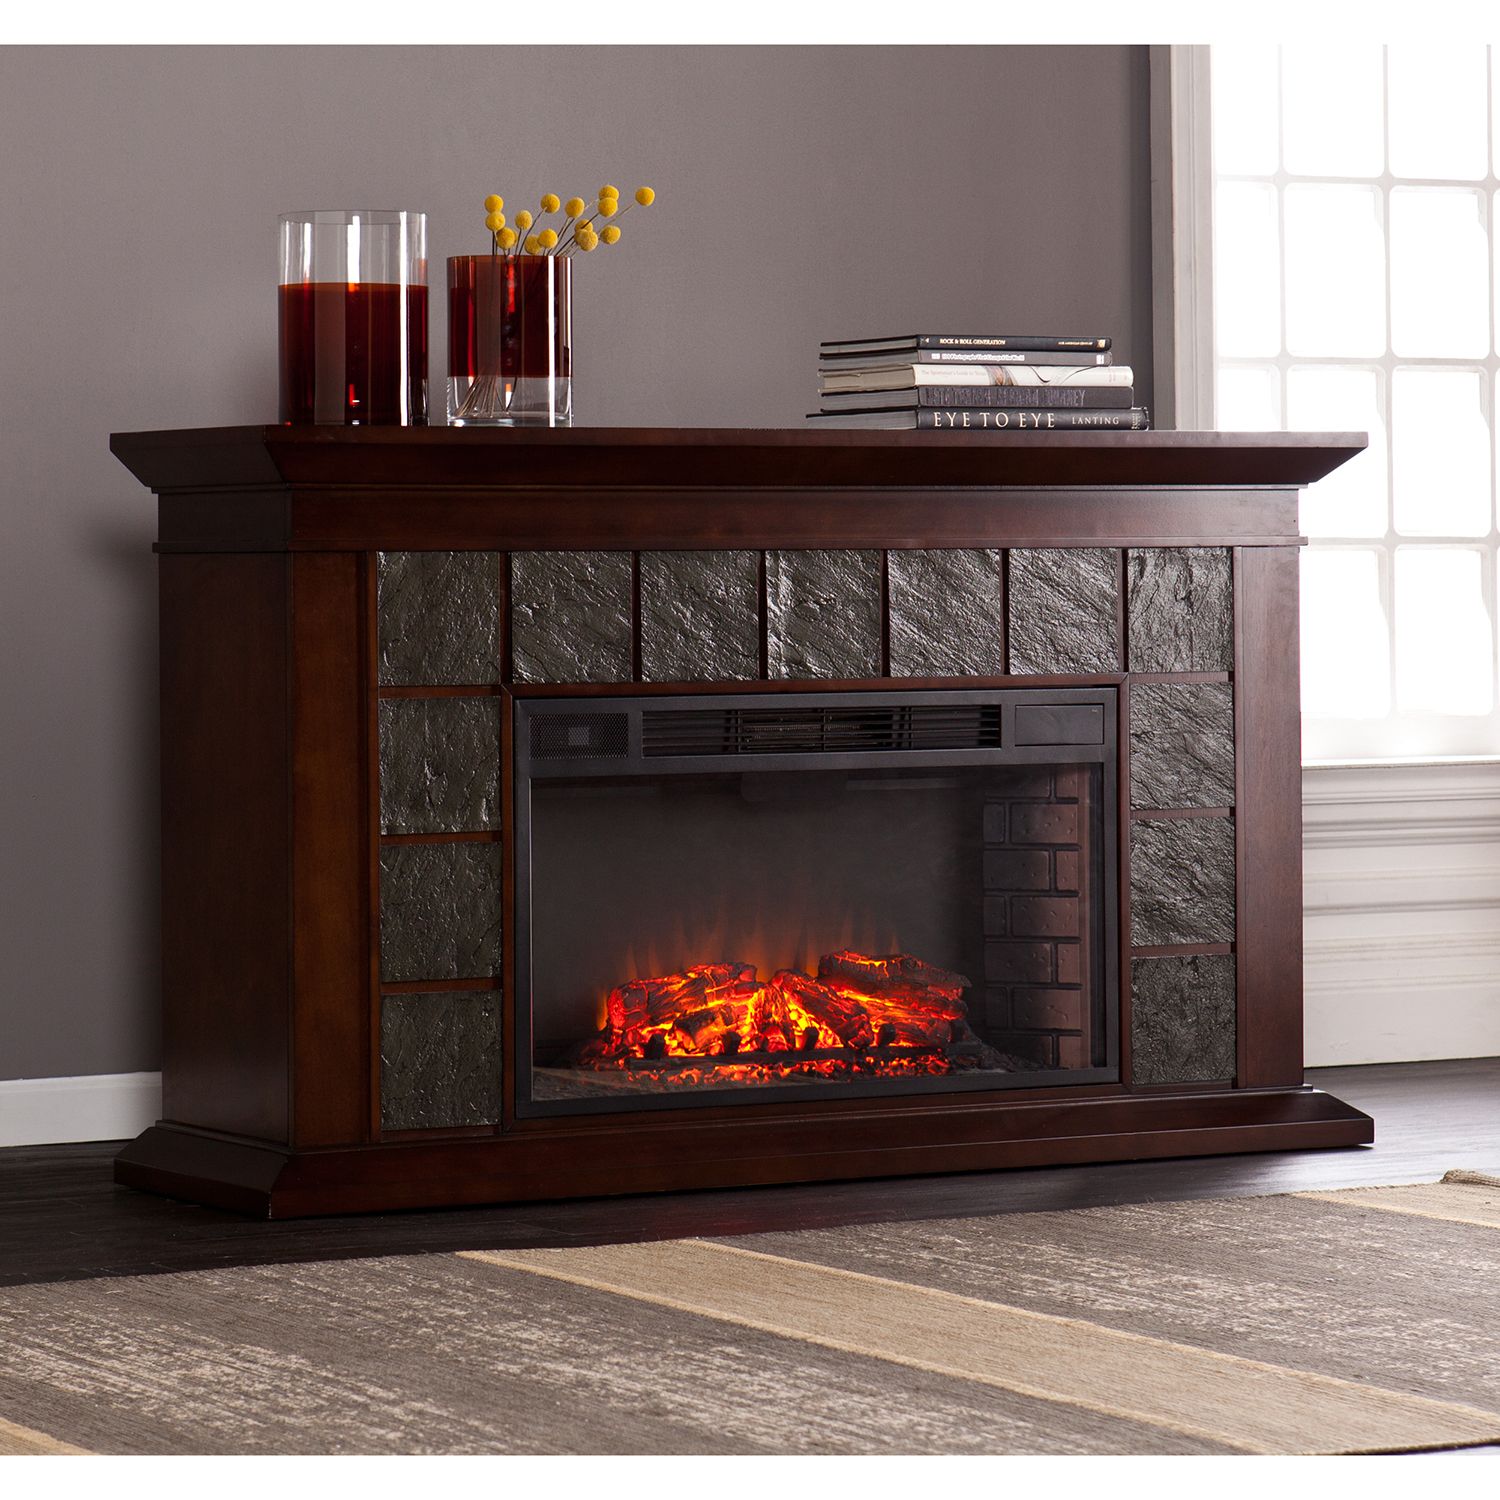 Eldorado Faux Slate Fireplace in Warm Brown Walnut Finish